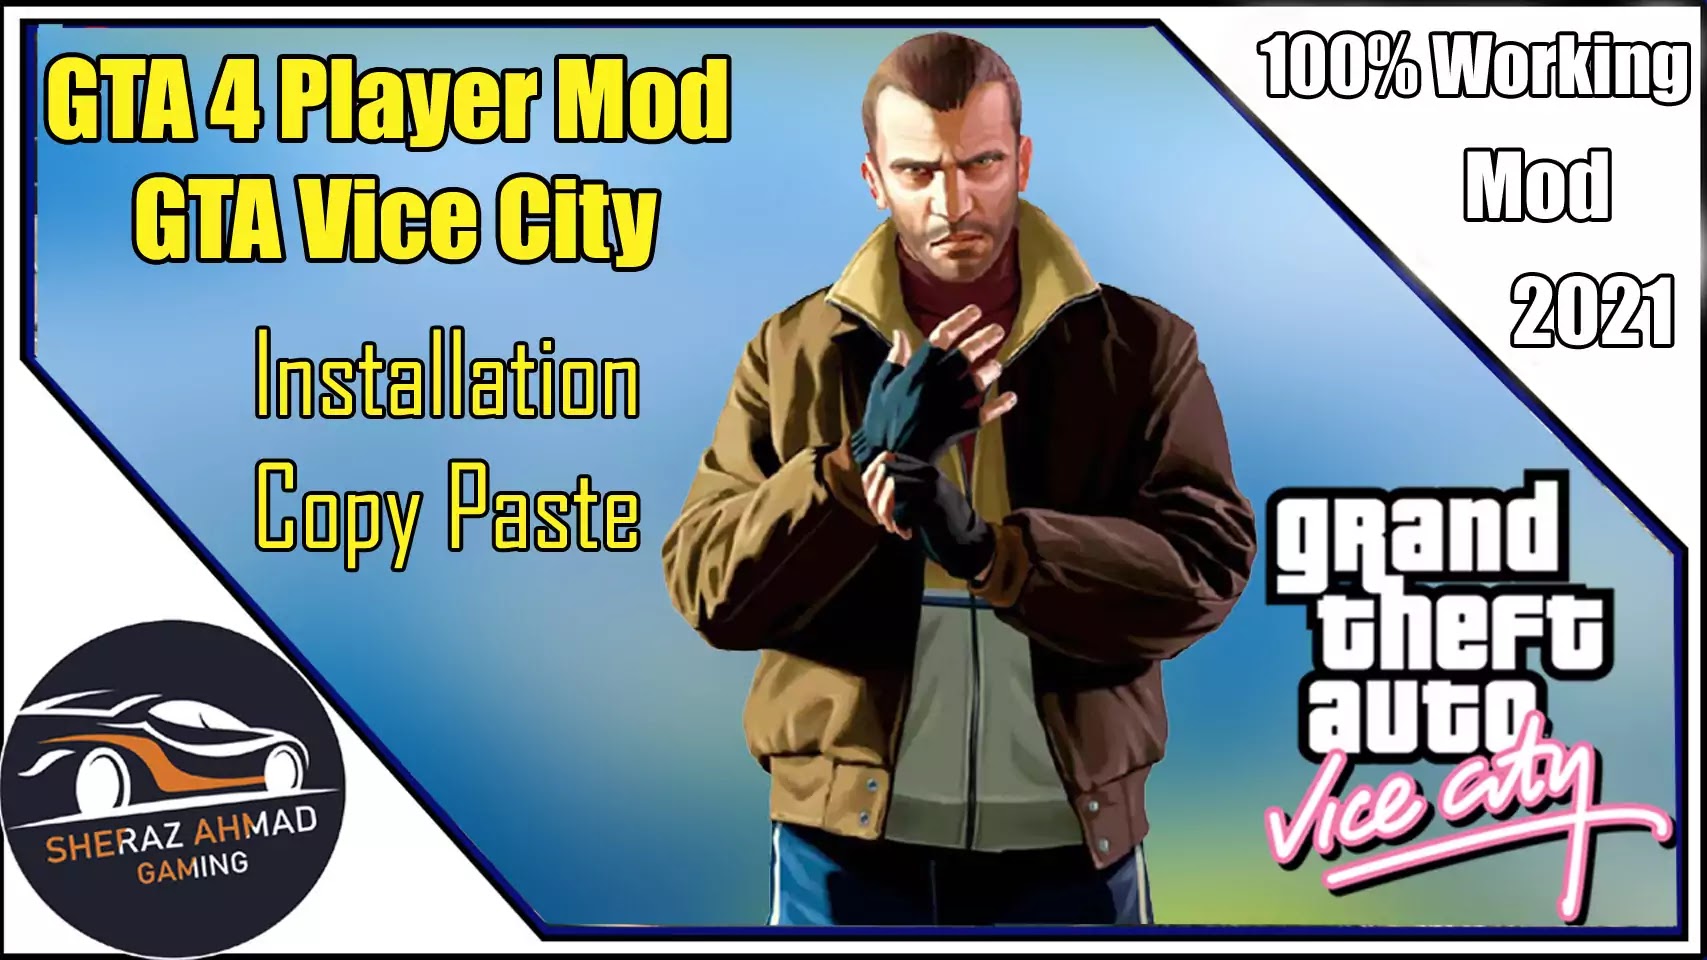 Download GTA 4 Player Mod For GTA Vice City - Sheraz Ahmad Gaming